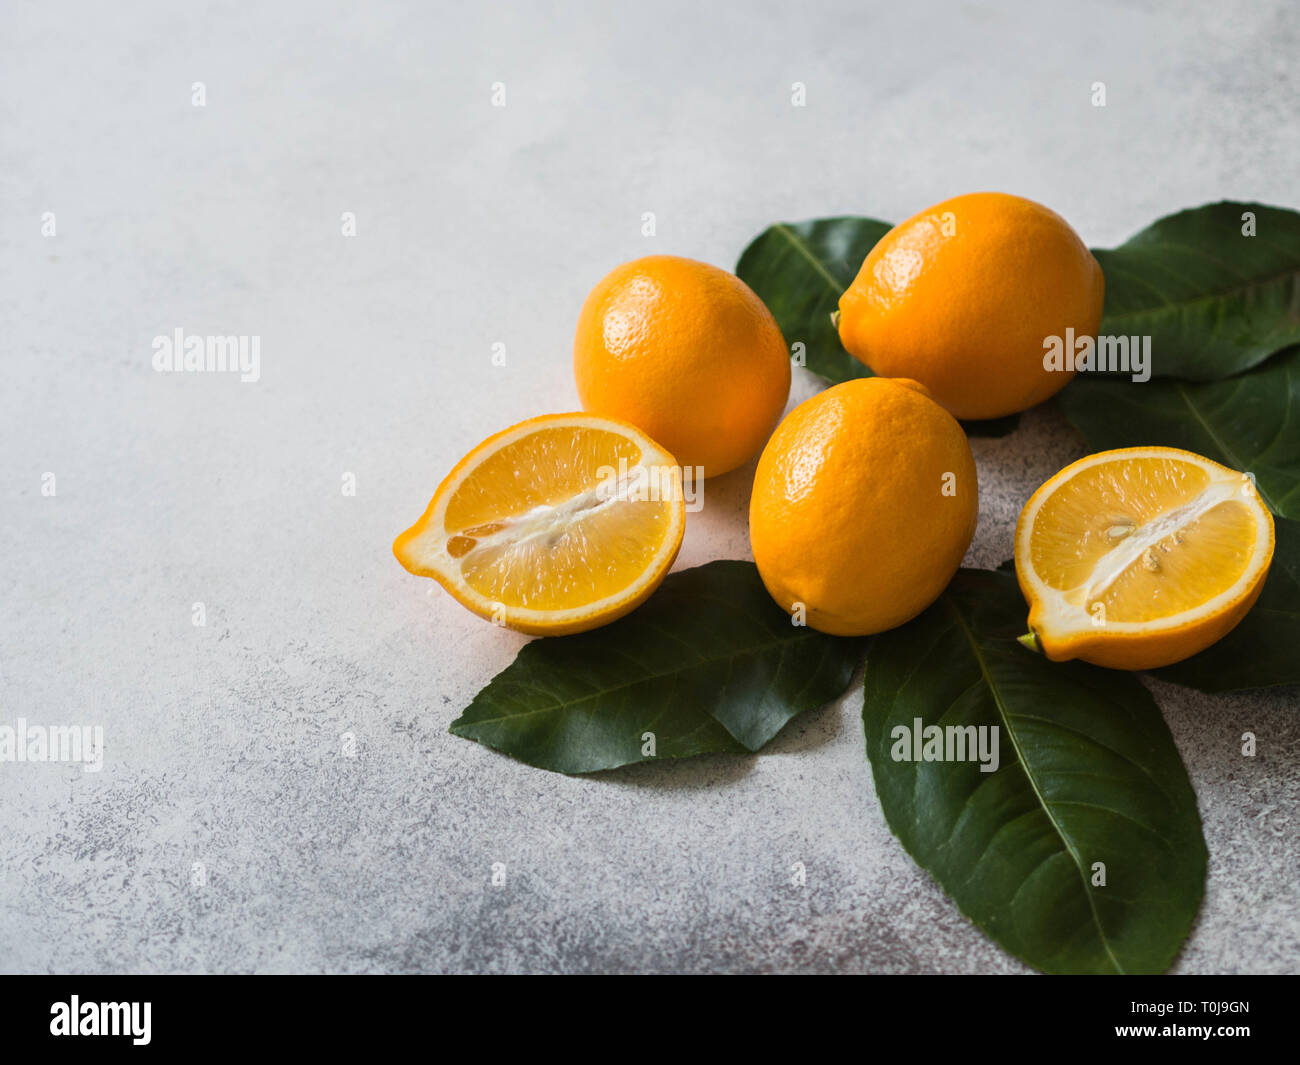 Orange meyeri limoni con foglie verdi in un gruppo su sfondo grigio. Foto Stock